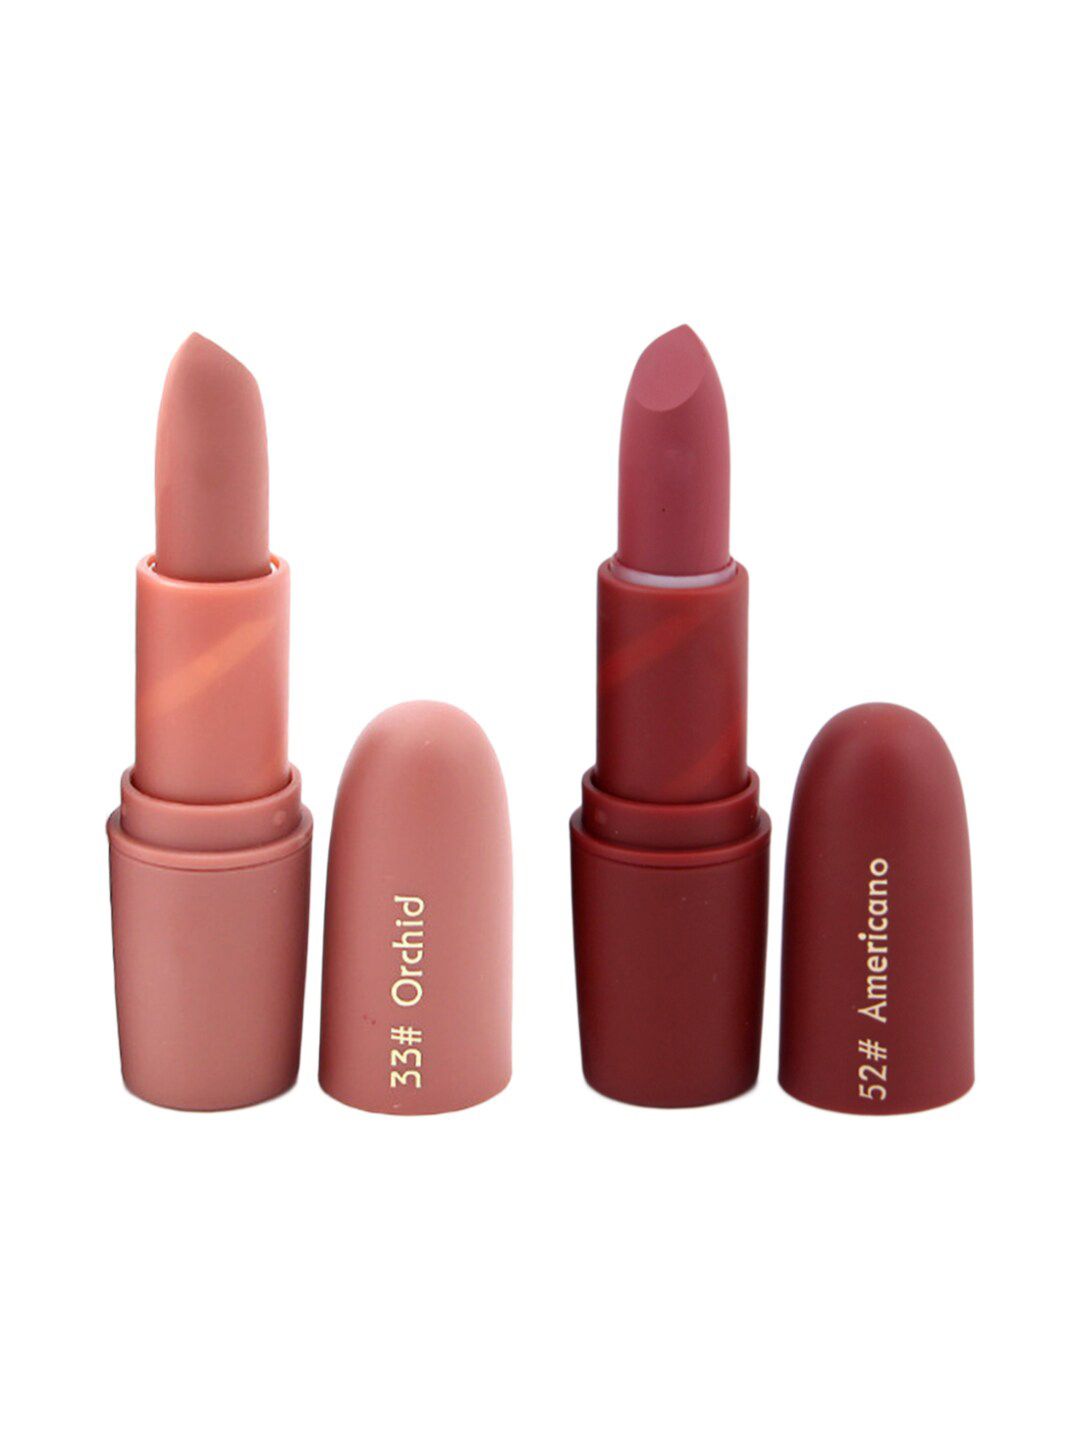 MISS ROSE Set of 2 Matte Creamy Lipsticks - Orchid 33 & Americano 52 Price in India